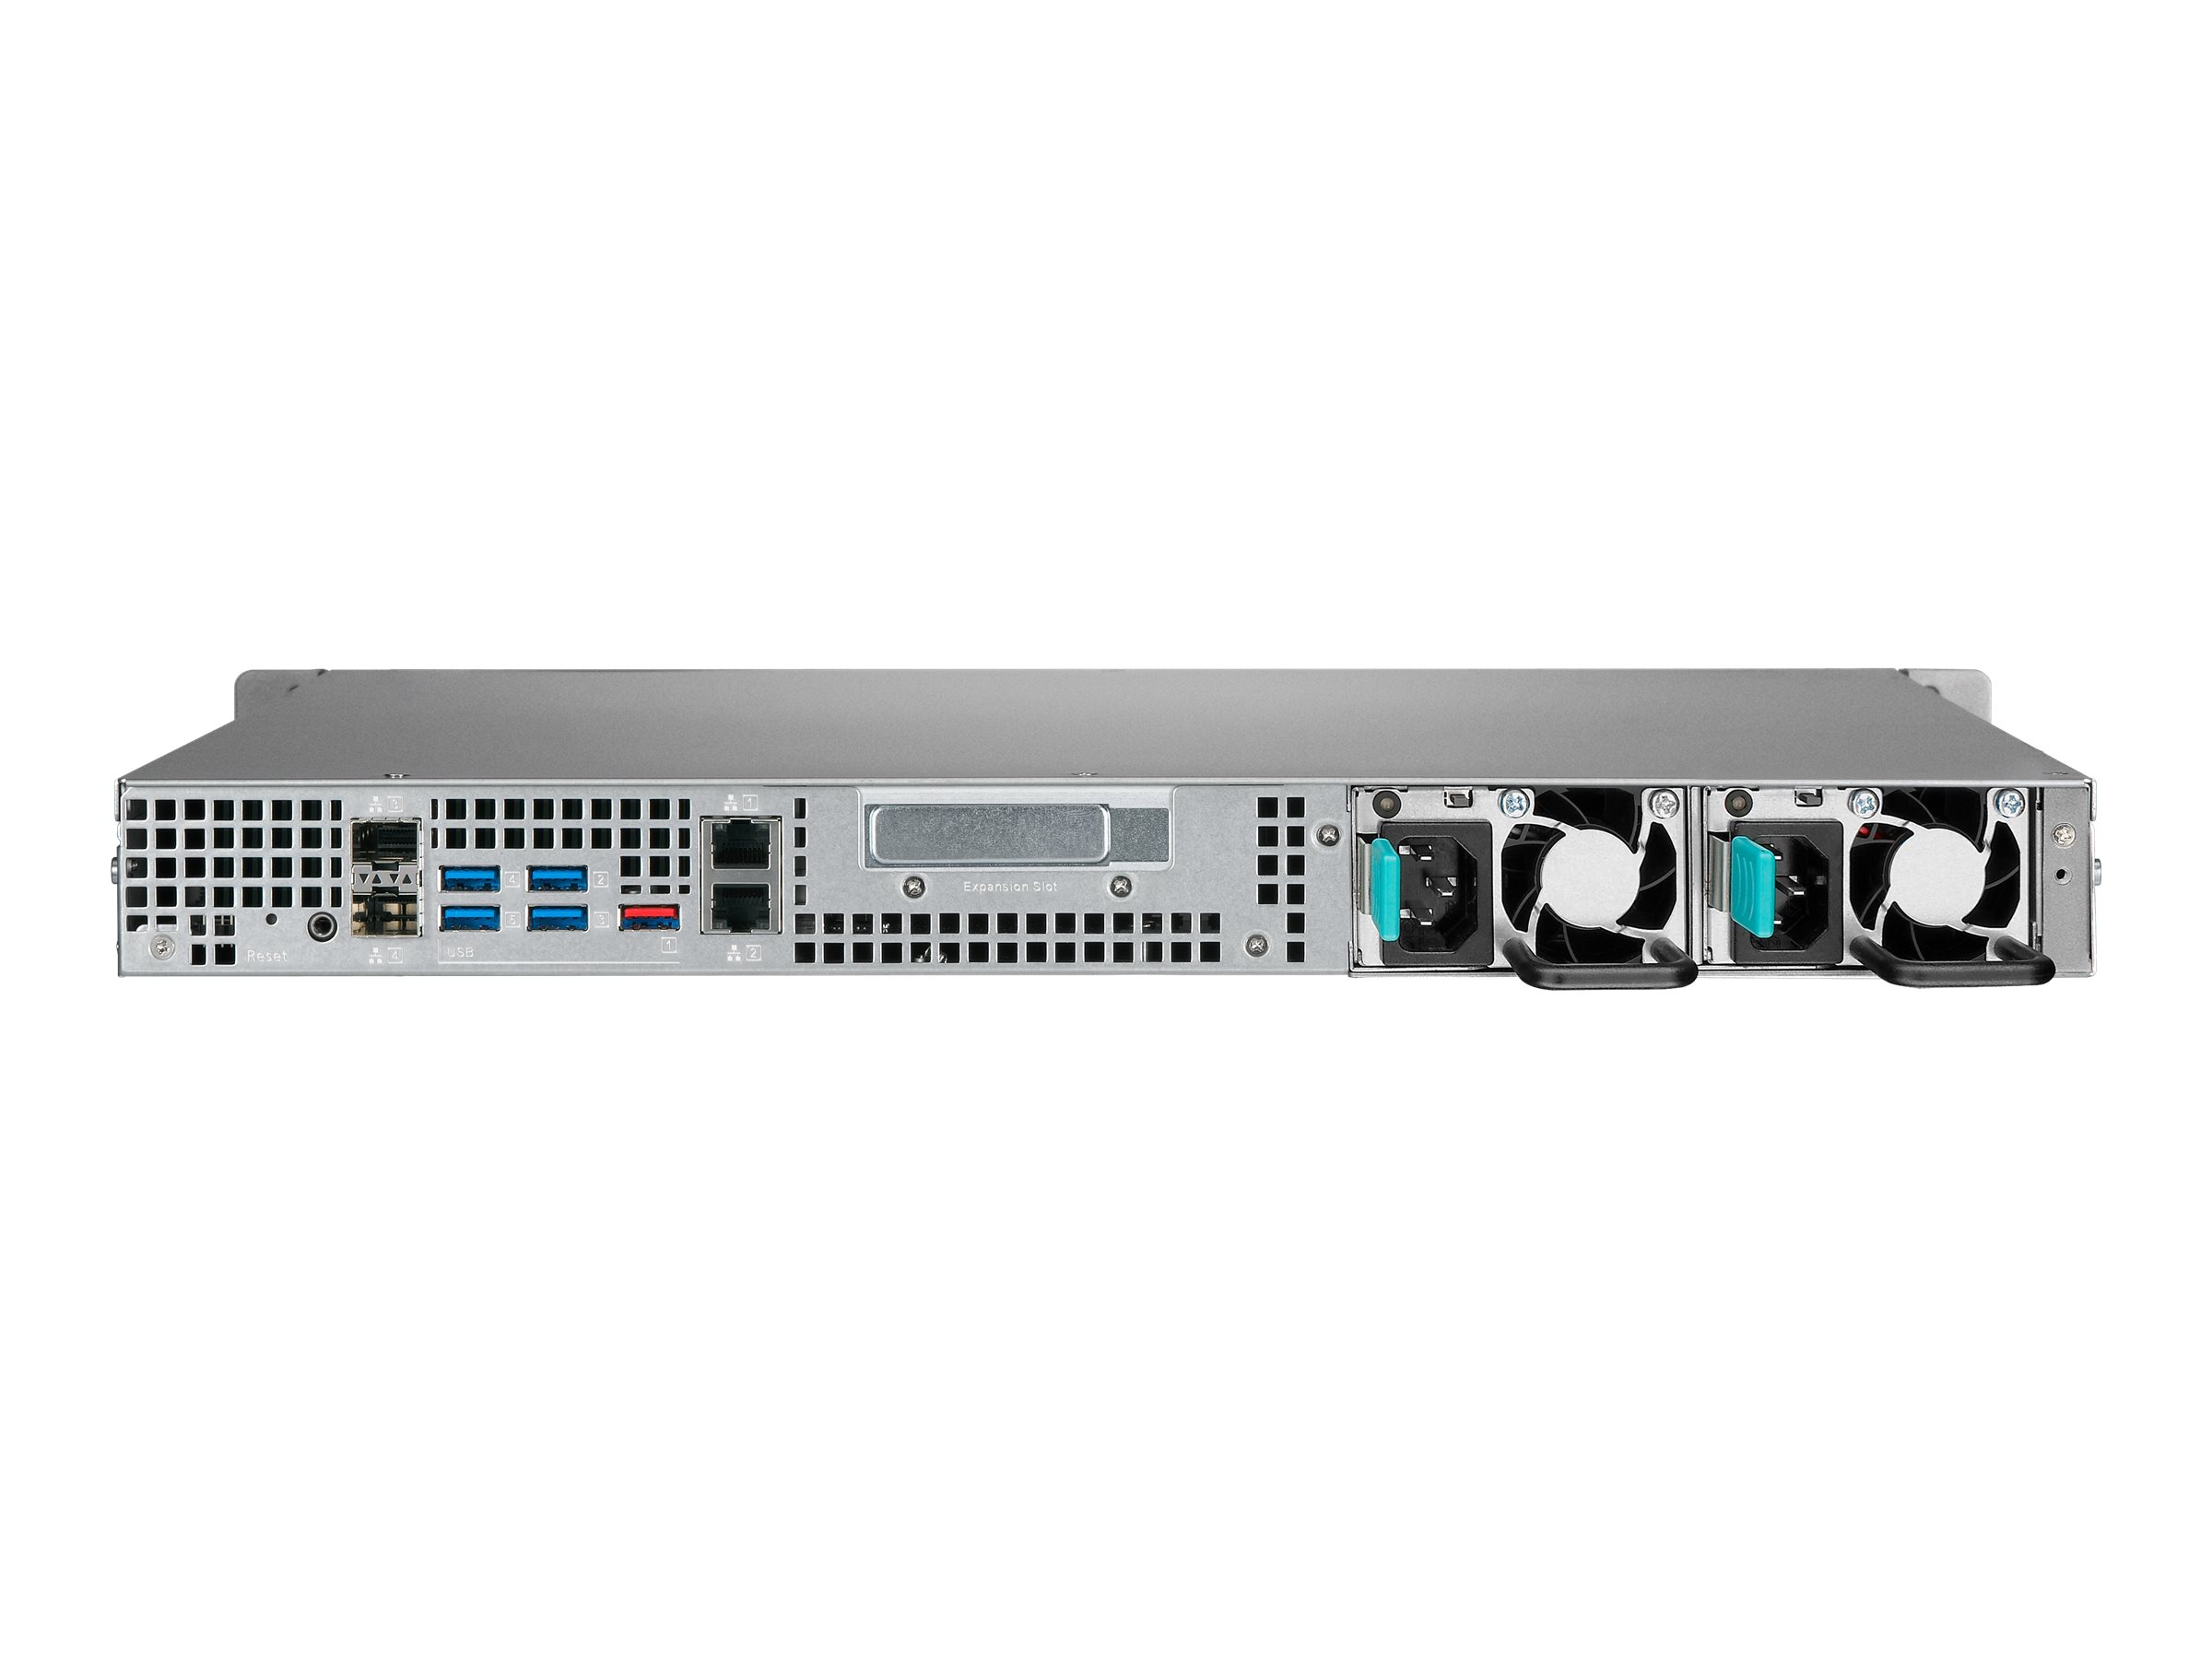 QNAP TS-977XU-RP - Serveur NAS - 9 Baies - rack-montable - SATA 6Gb/s - RAID RAID 0, 1, 5, 6, 10, 50, JBOD - RAM 8 Go - Gigabit Ethernet / 10 Gigabit Ethernet - iSCSI support - 1U - TS-977XU-RP-3600-8G - NAS